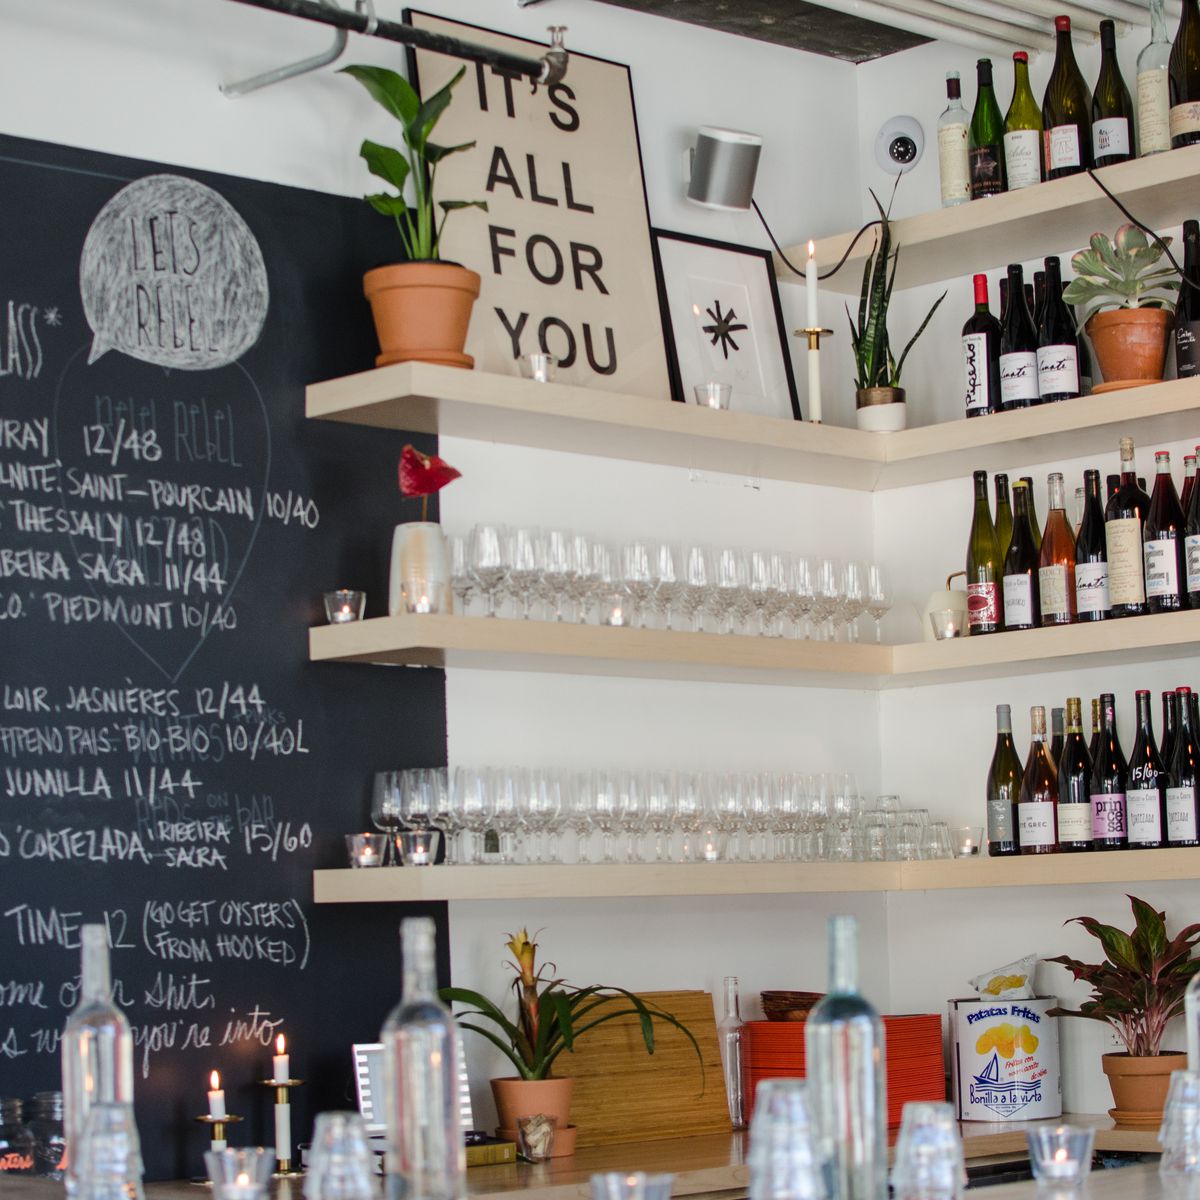 Shelves of wine bottles and a chalkboard menu inside a wine bar.